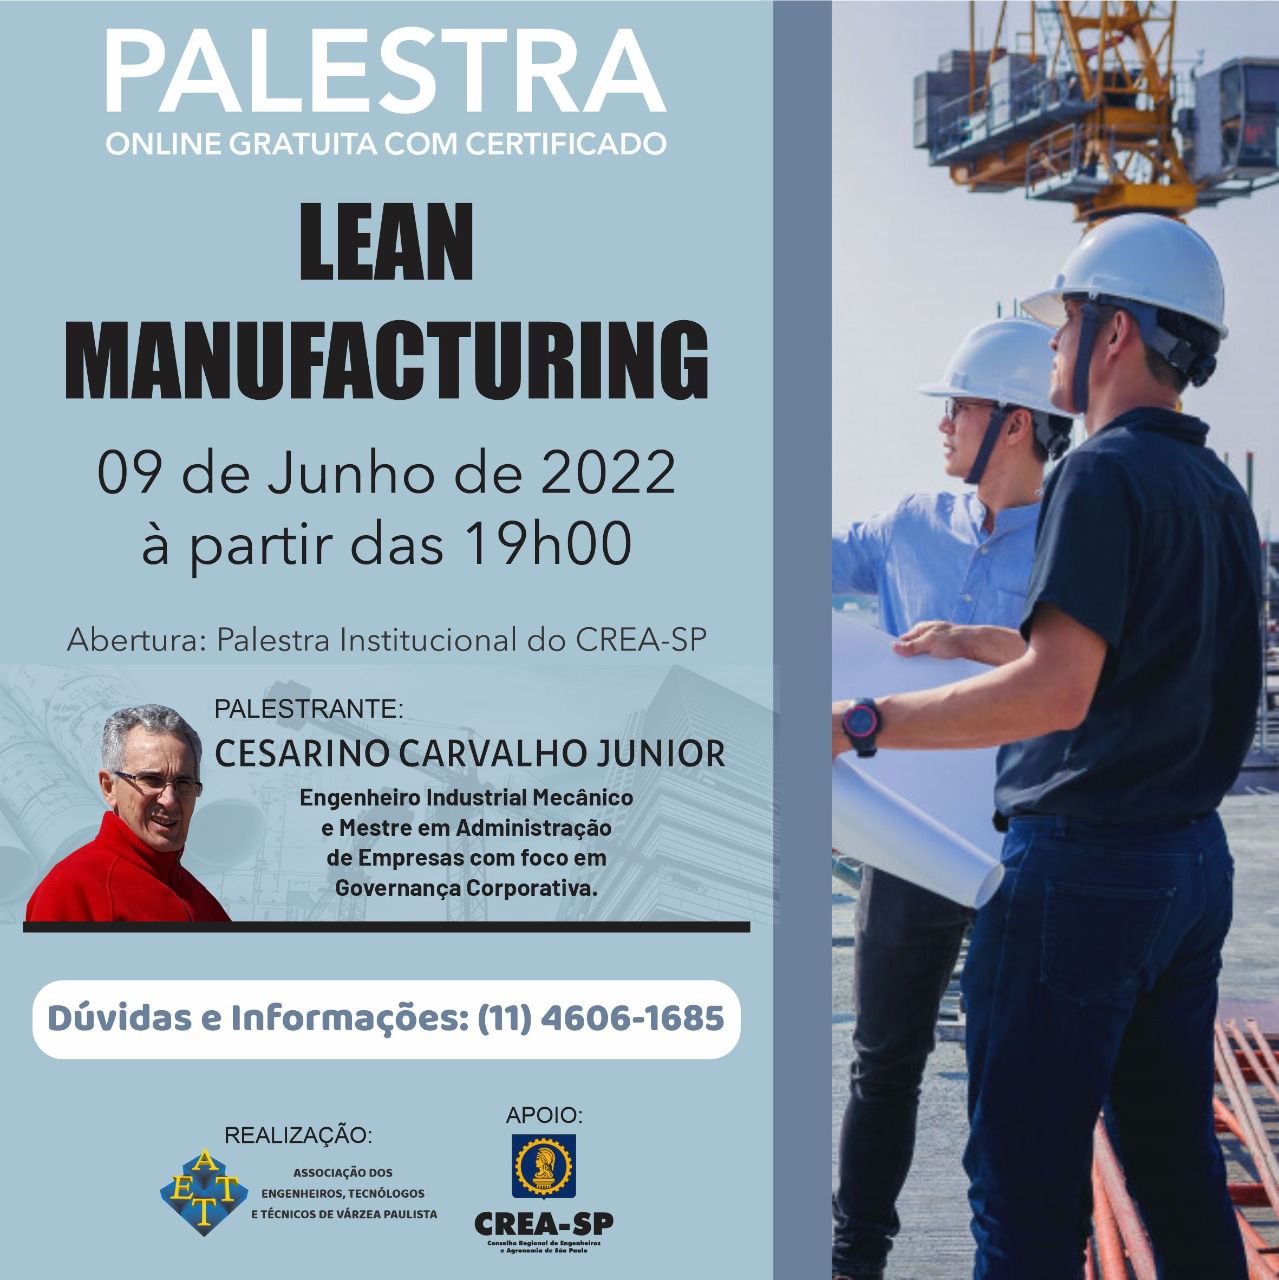 Palestra: Lean Manufacturing